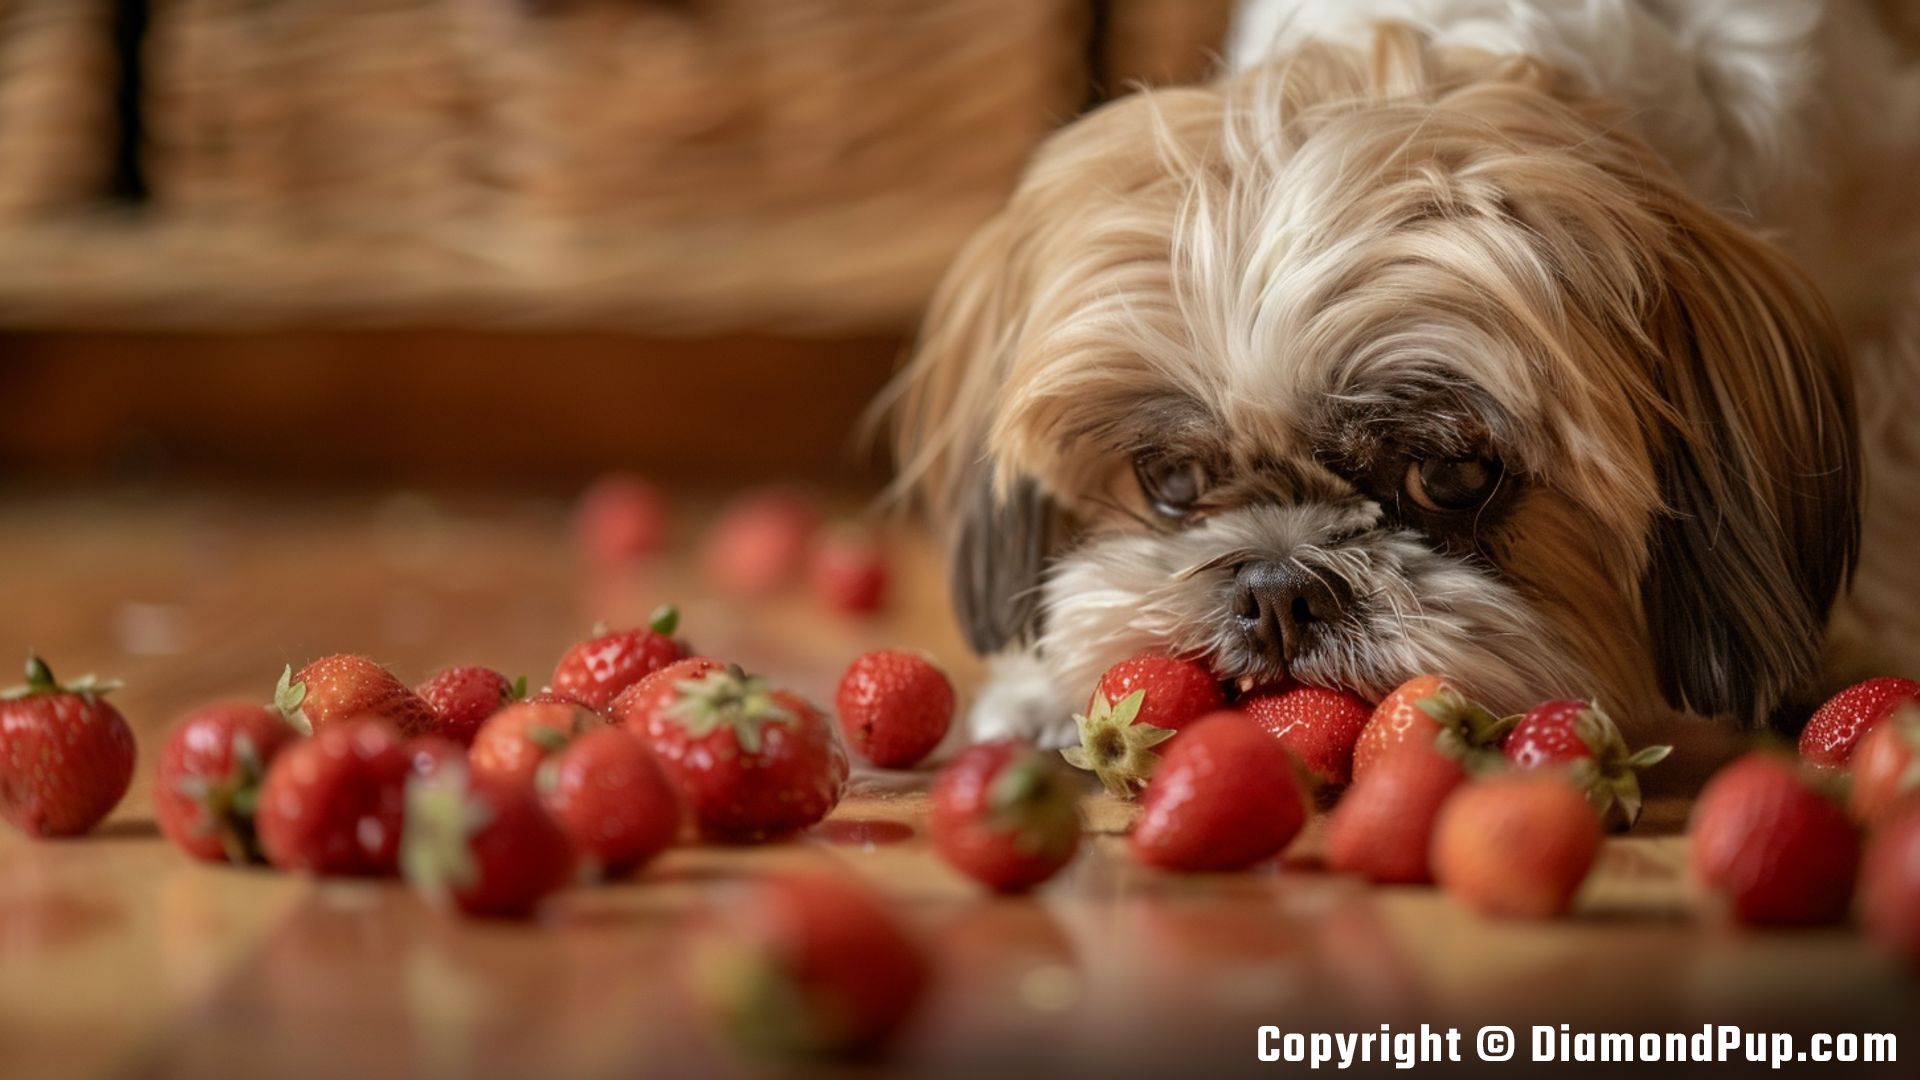 Photograph of a Cute Shih Tzu Eating Strawberries